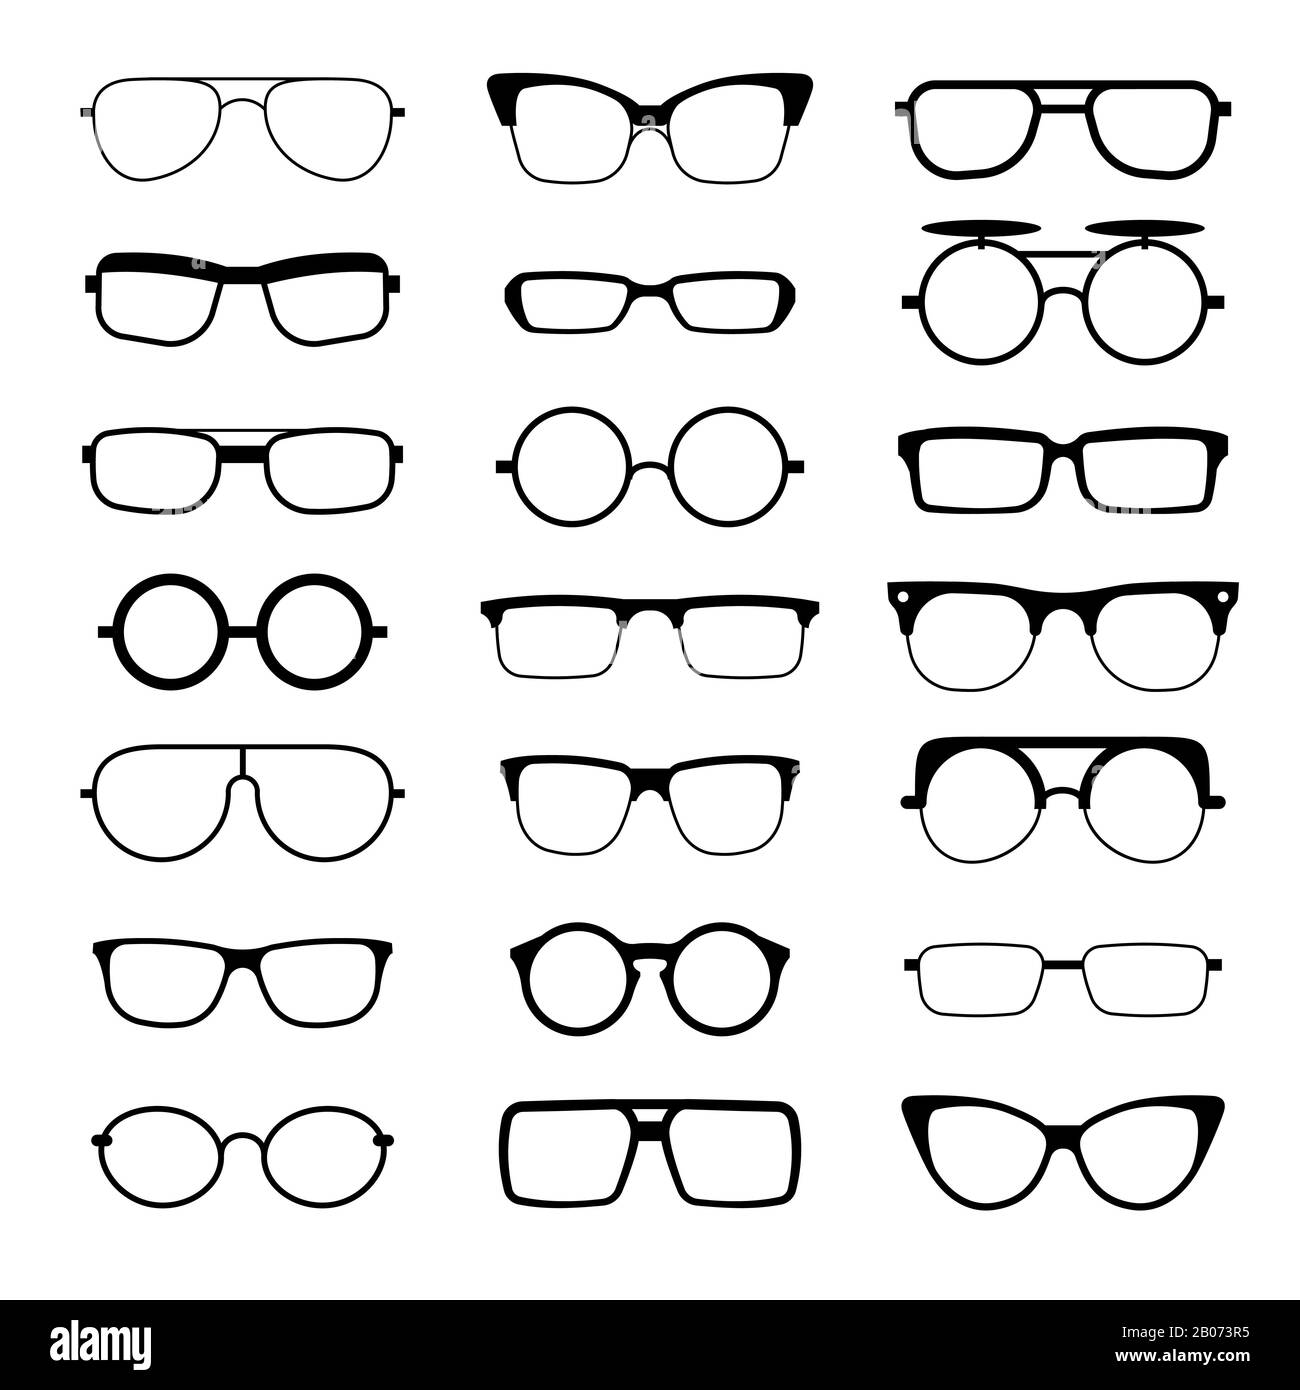 Sunglasses Eyeglasses Geek Glasses Different Model Shapes Vector